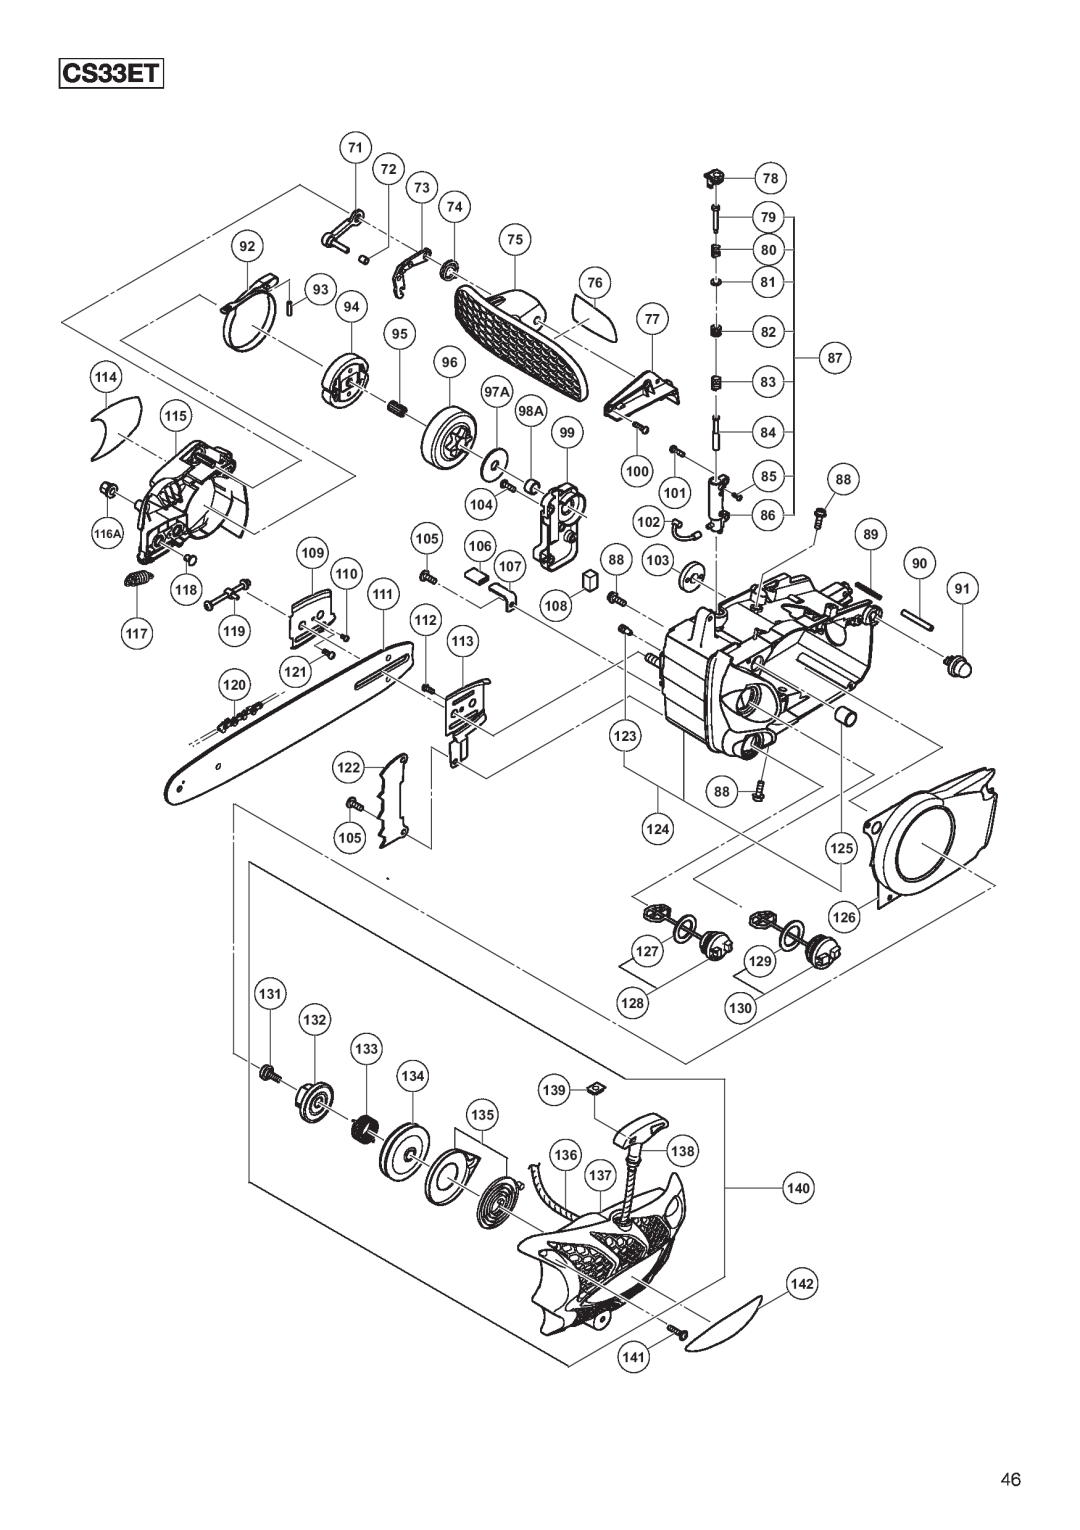 Hitachi Koki USA CS33EA manual #3%4, CS33ET2/3, 䎵䏈䏙䎑䎖 